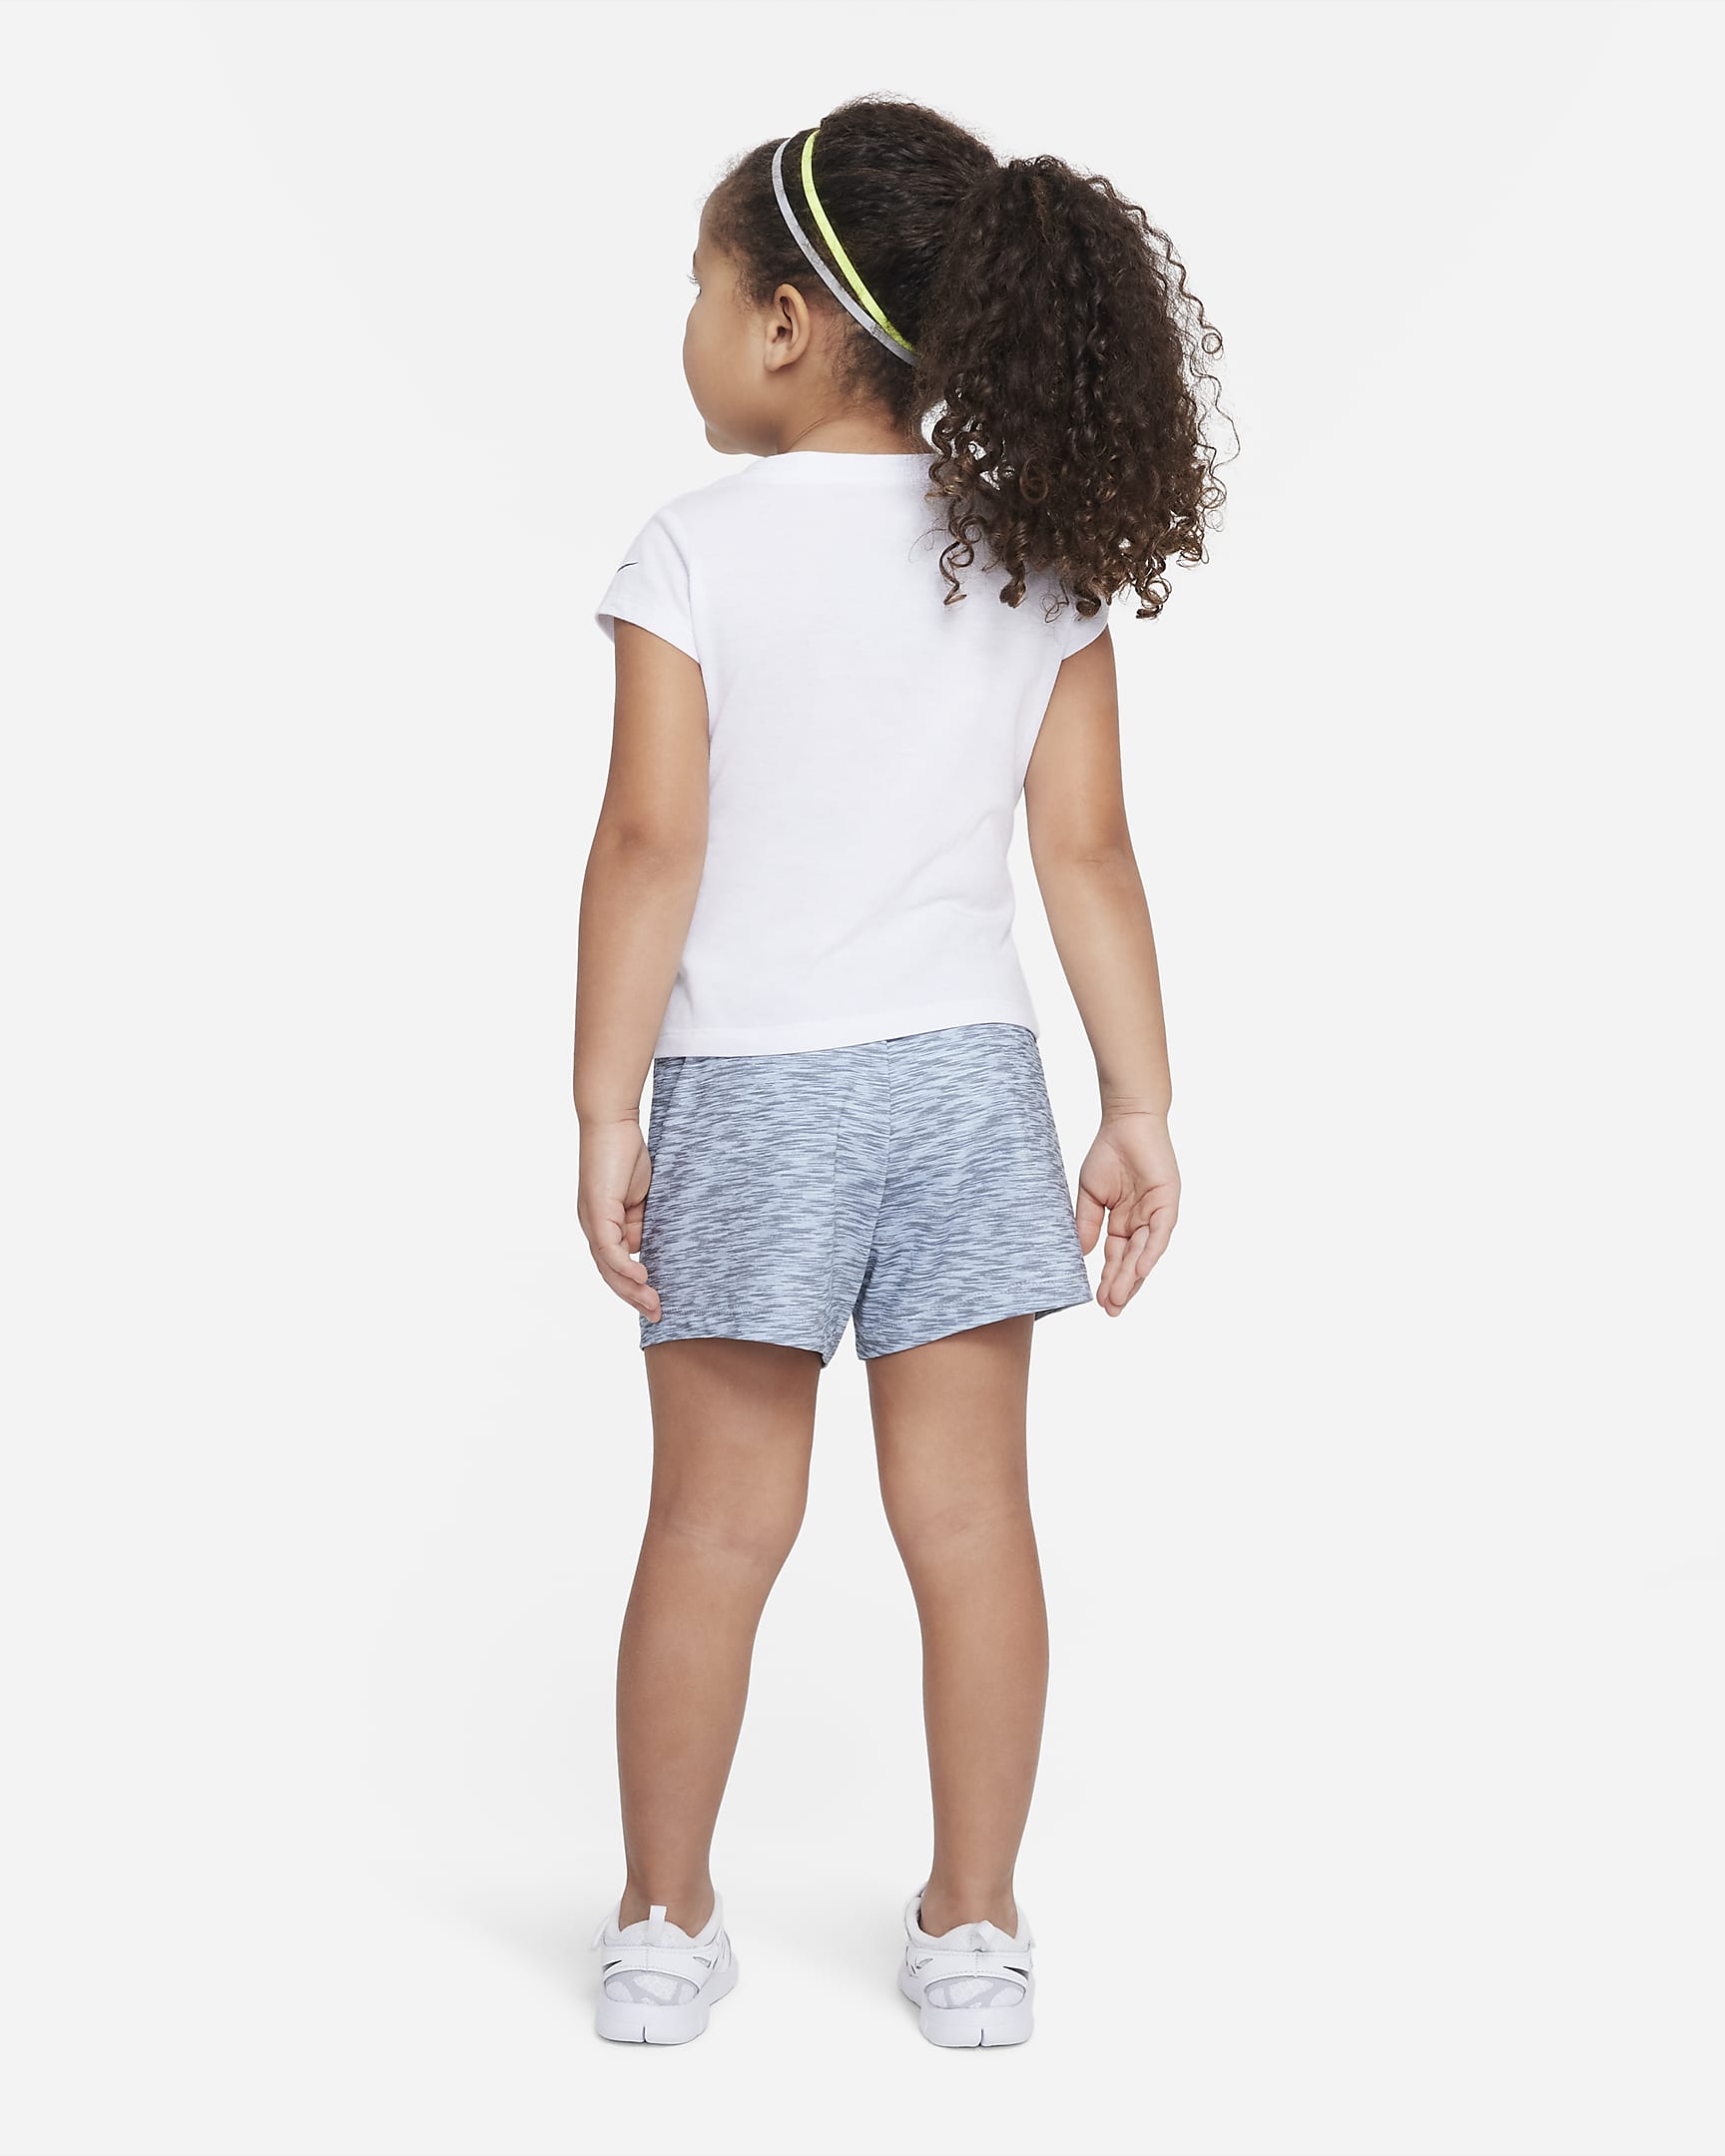 Nike Tee and Shorts Set Toddler Set. Nike.com